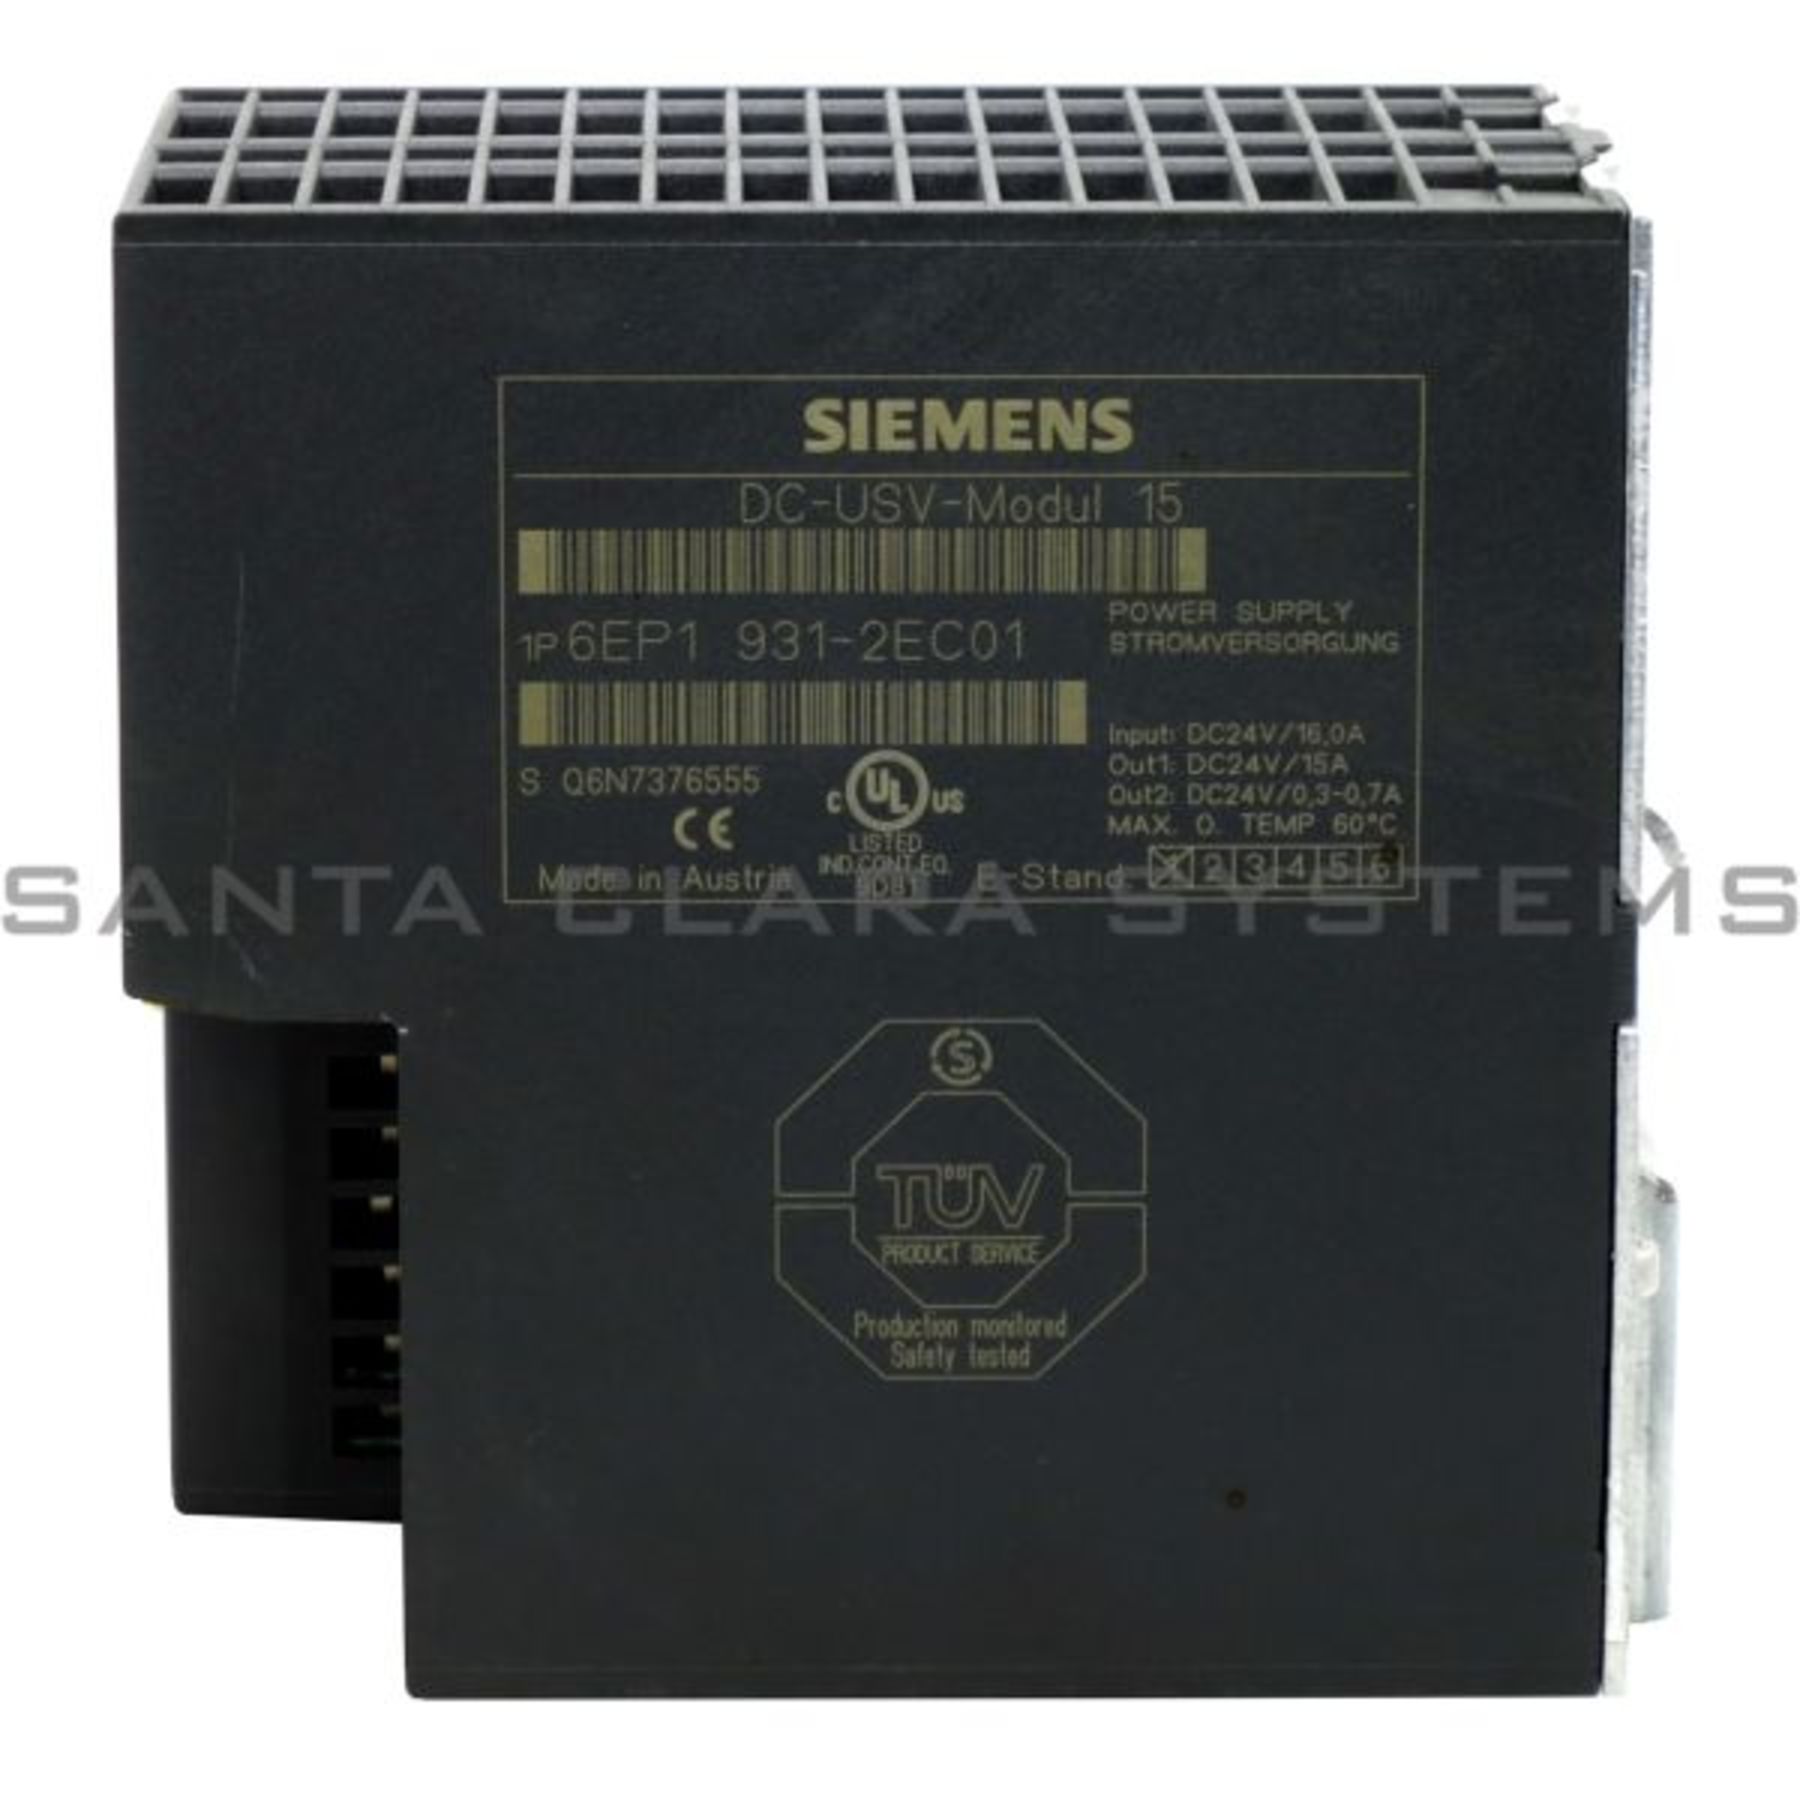 Módulo UPS Siemens Sitop Power DC 15 6EP1931-2EC31 6EP1 931-2EC31